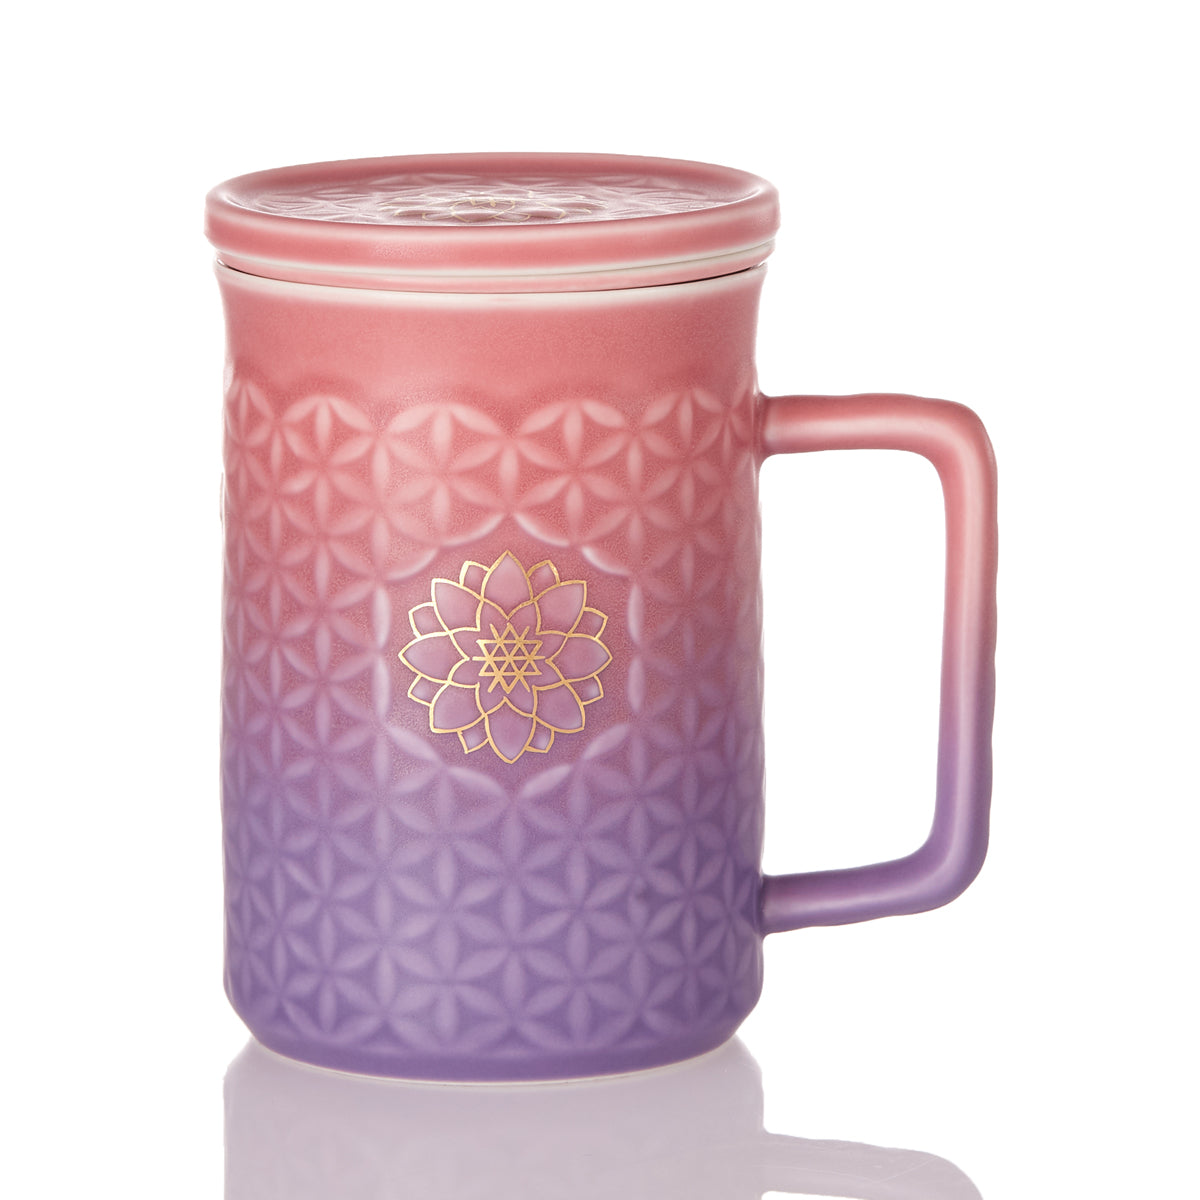 Flower of Life 3-in-1 Tea Mug with Infuser, Ceramics 15.5 oz-1